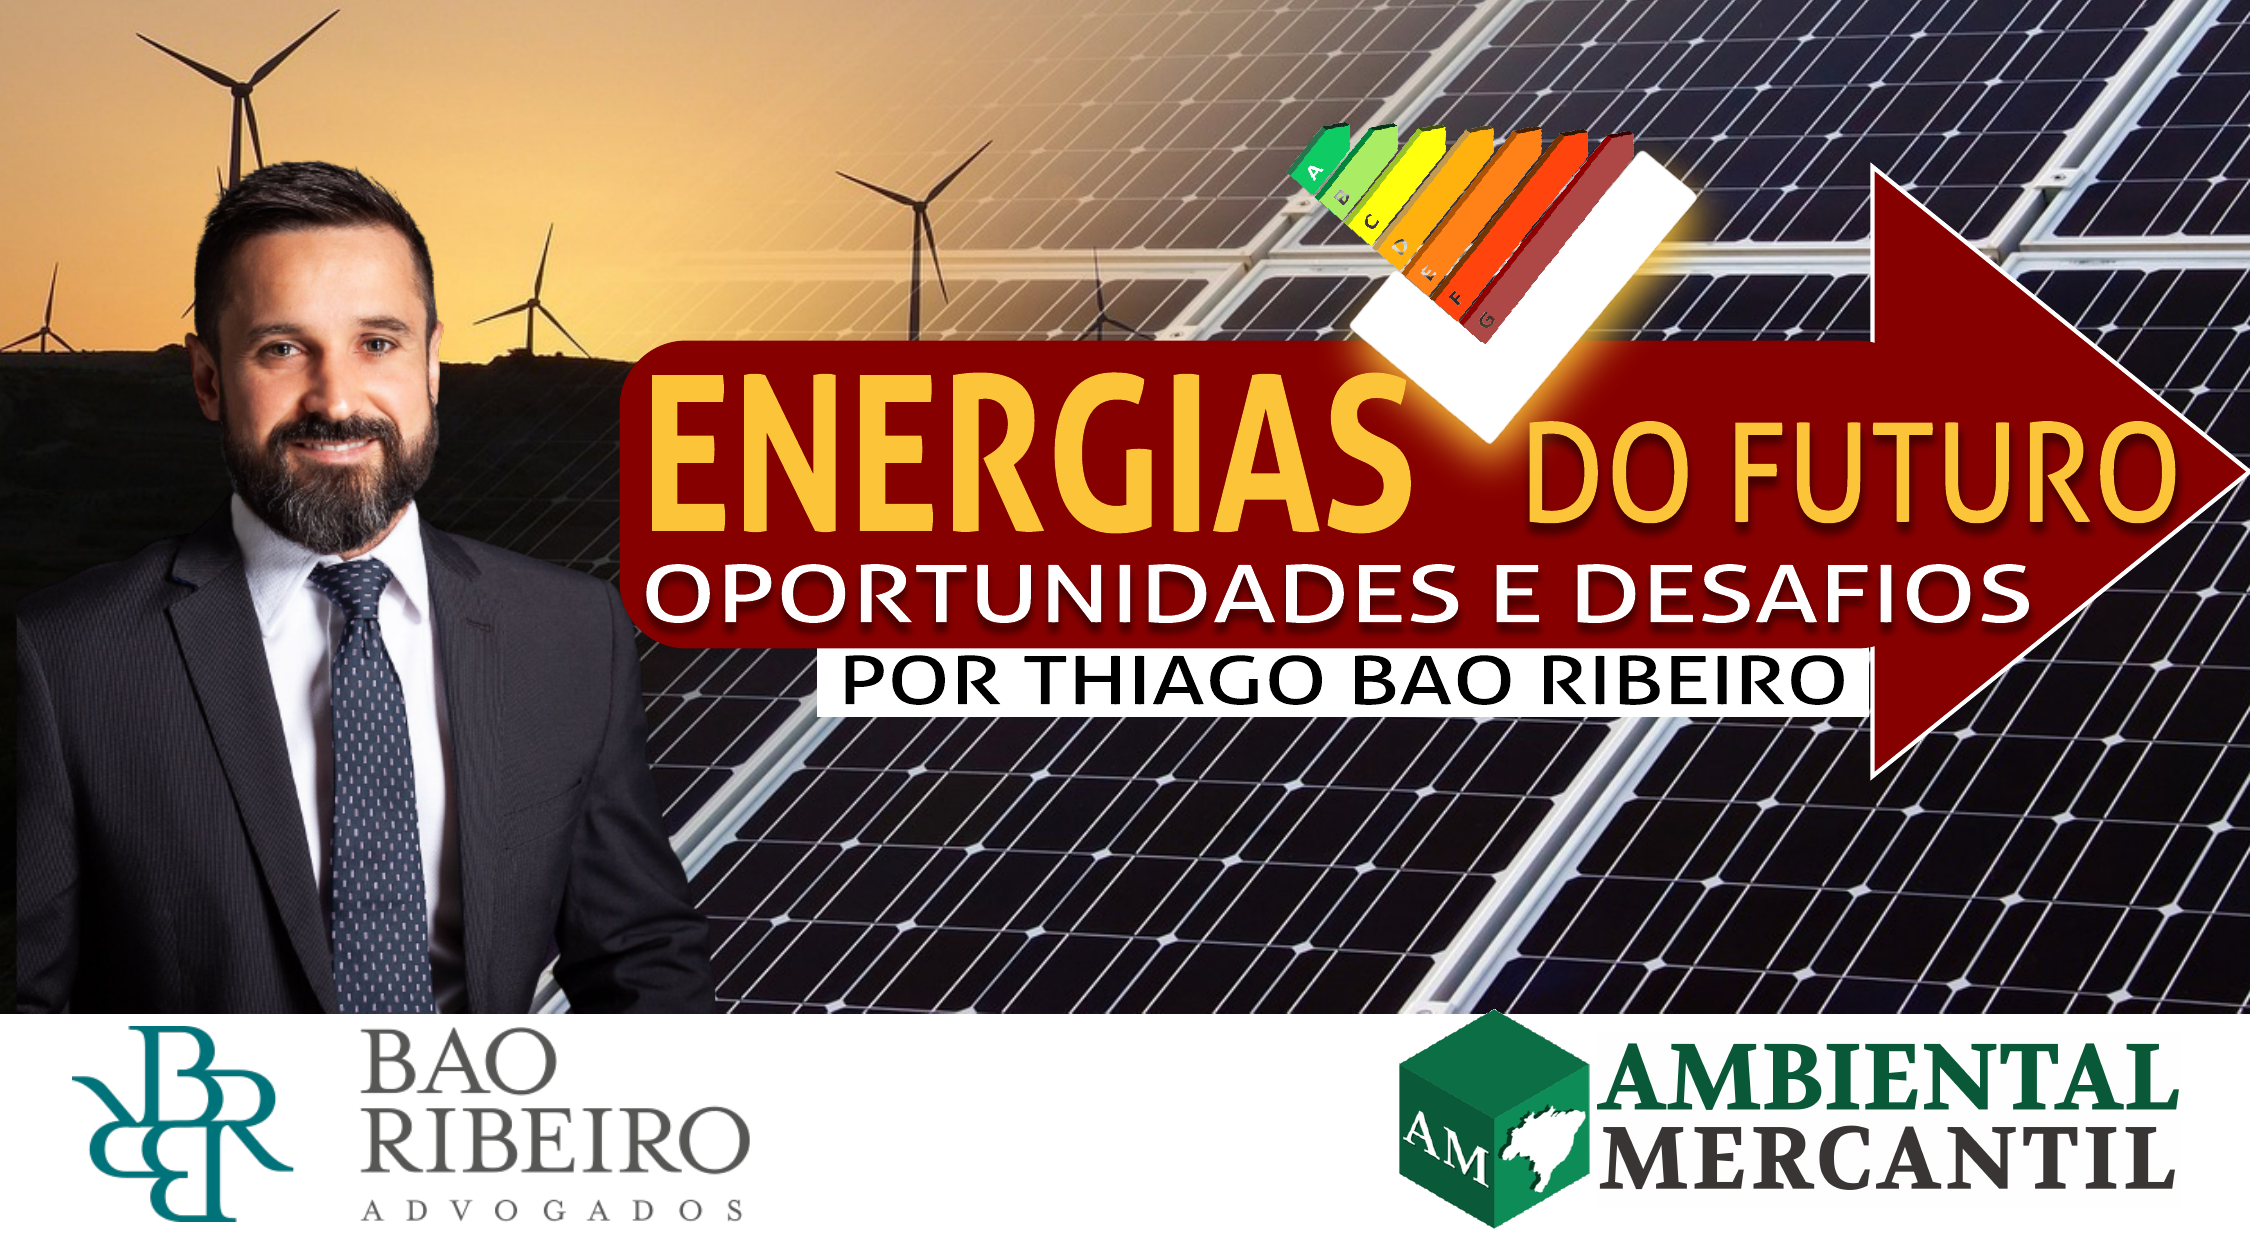 THIAGO-BAO-RIBEIRO-COLUNISTA-ENERGIAS-DO-FUTURO-AMBIENTAL-MERCANTIL_V6_540x300